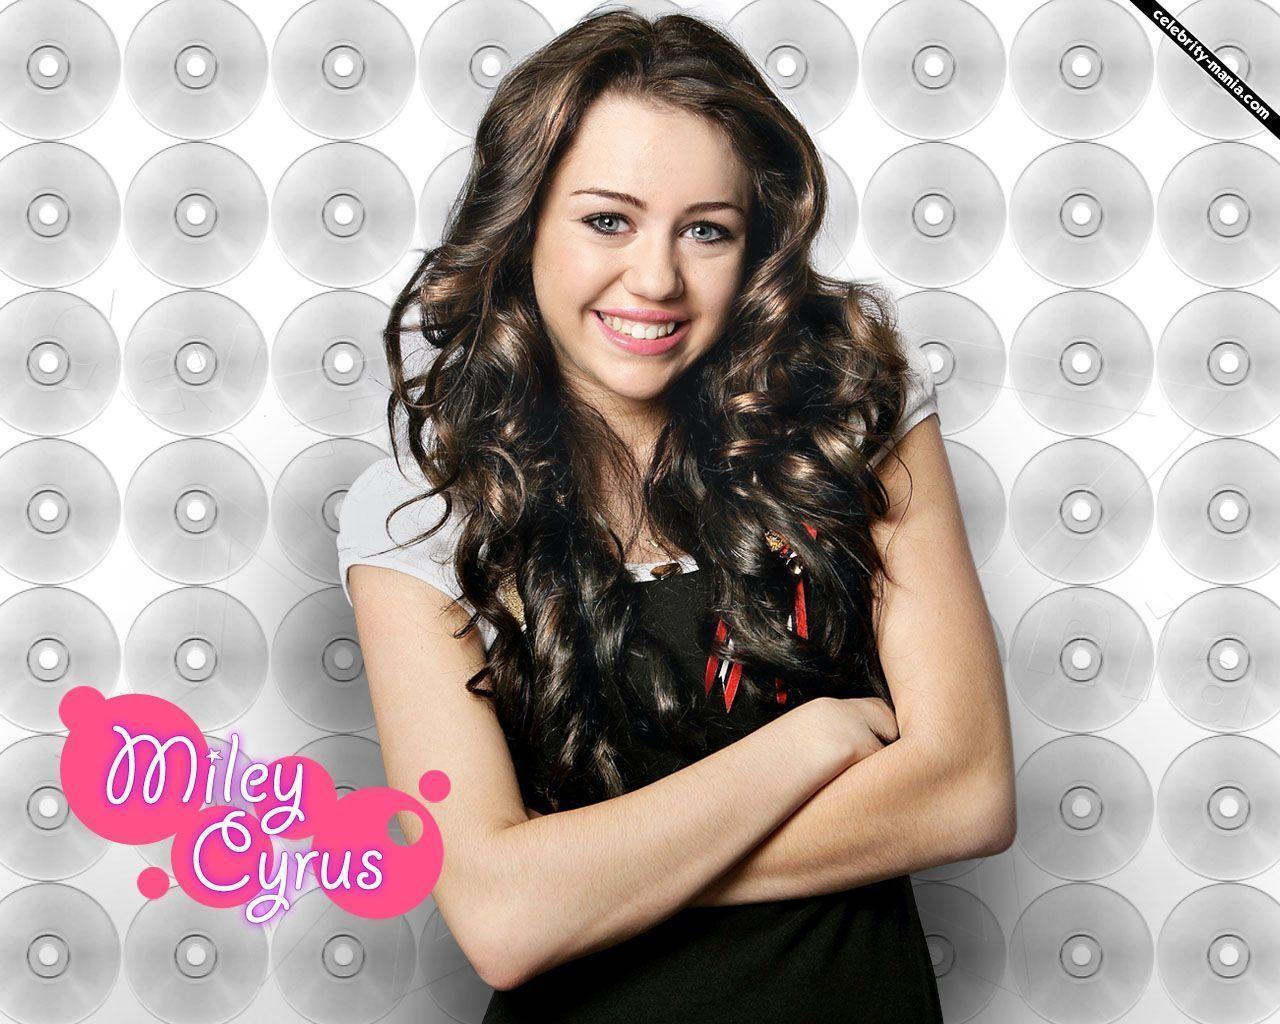 Miley Cyrus Background 1 HD Wallpaper. lzamgs